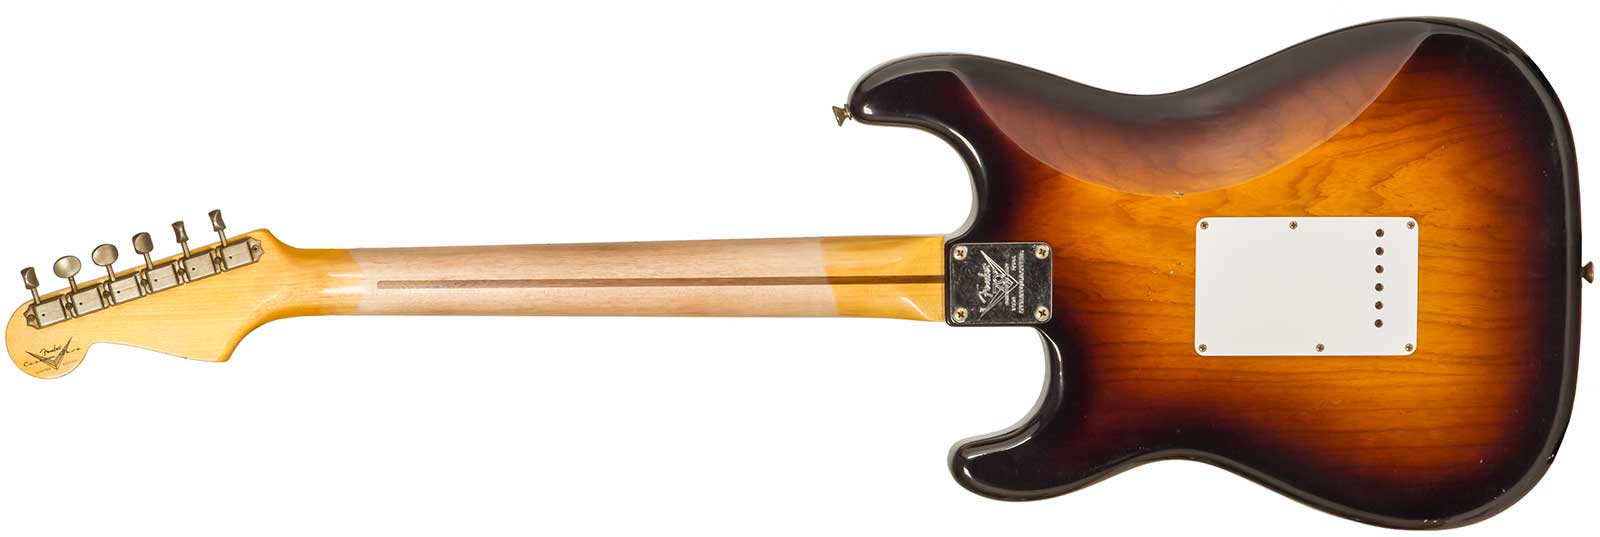 Fender Custom Shop Strat 1954 70th Anniv. 3s Trem Mn #xn4199 - Journeyman Relic Wide-fade 2-color Sunburst - Guitarra eléctrica con forma de str. - Va